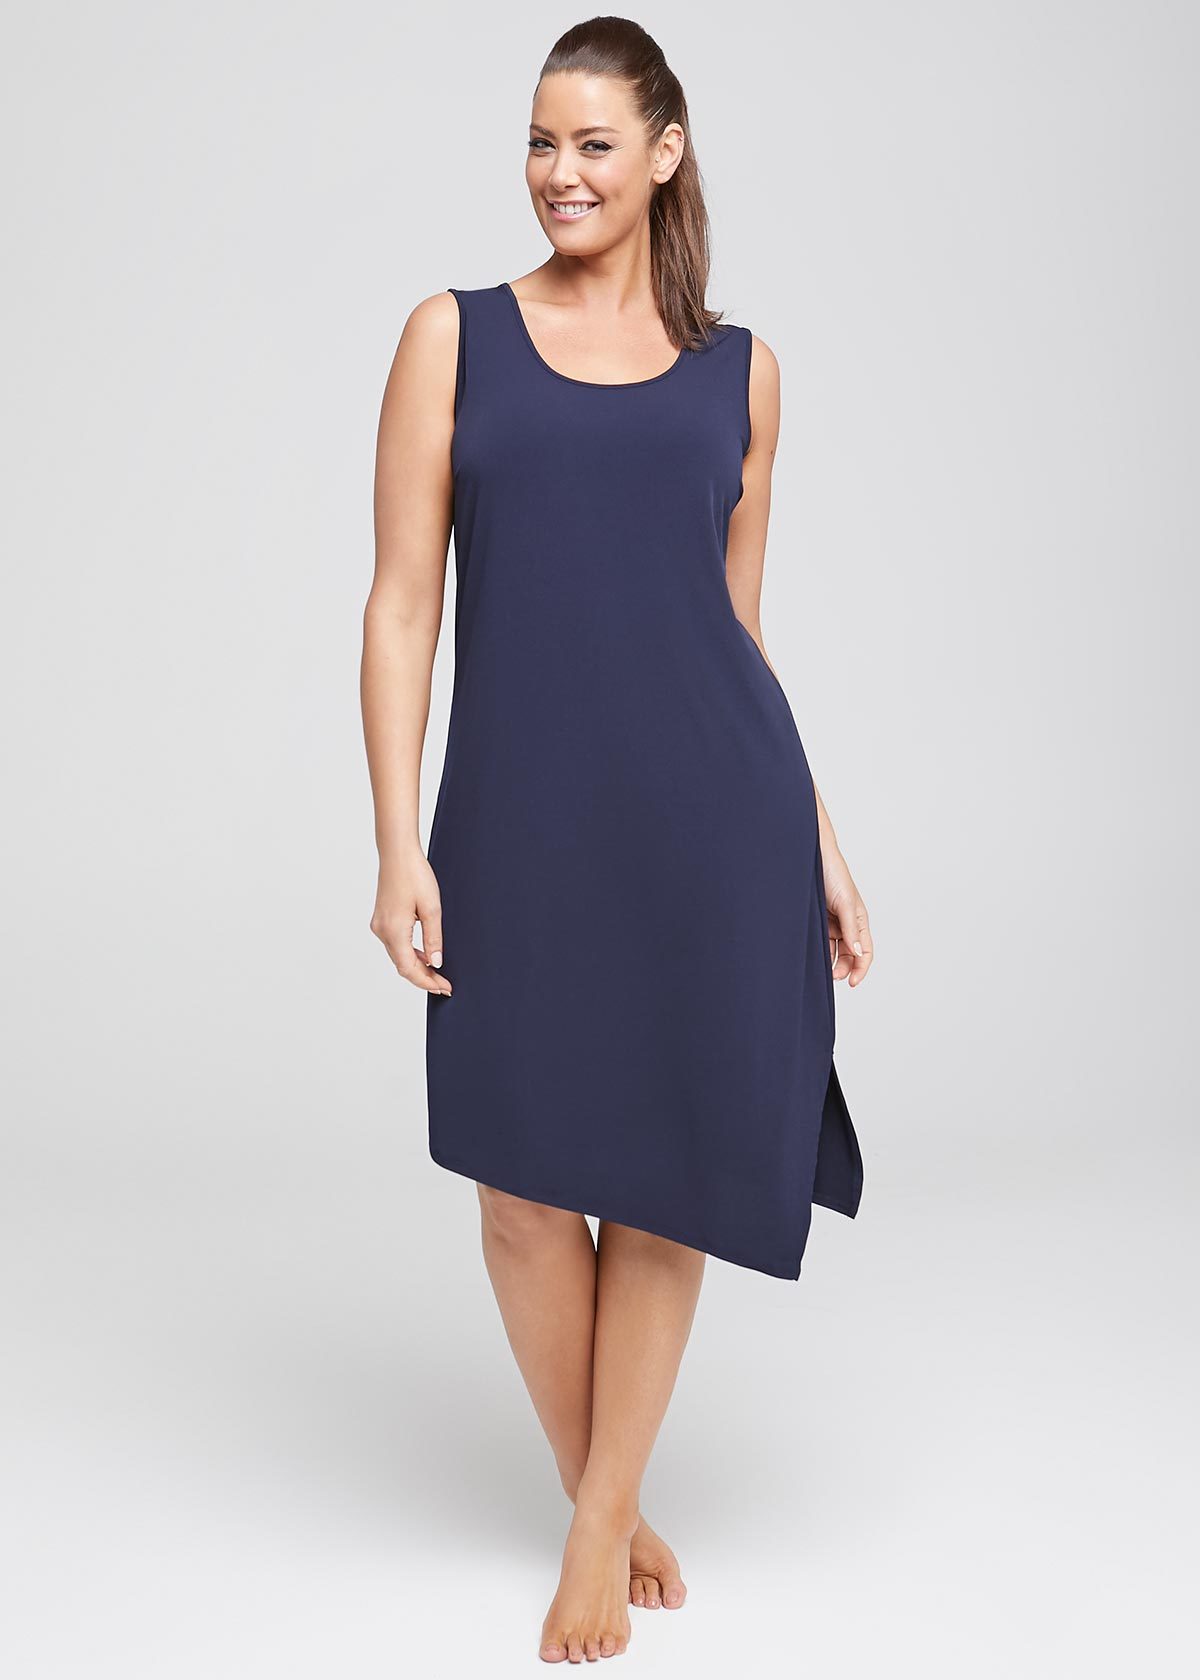 Shop Luna Basic Instinct Slip Dress in blue in sizes 12 to 24 | Taking ...